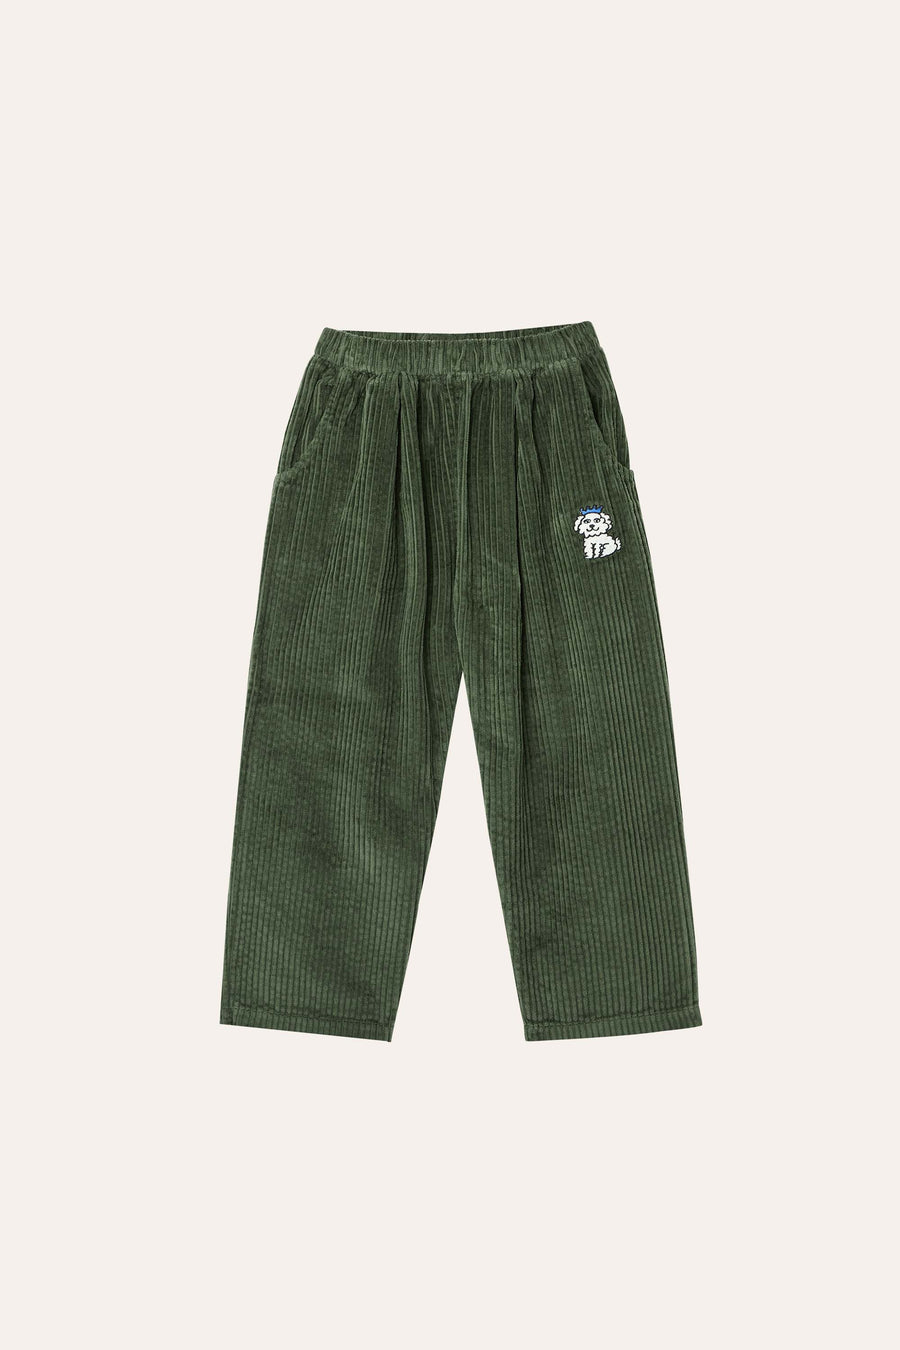 The Campamento - Green corduroy kids trousers - Green